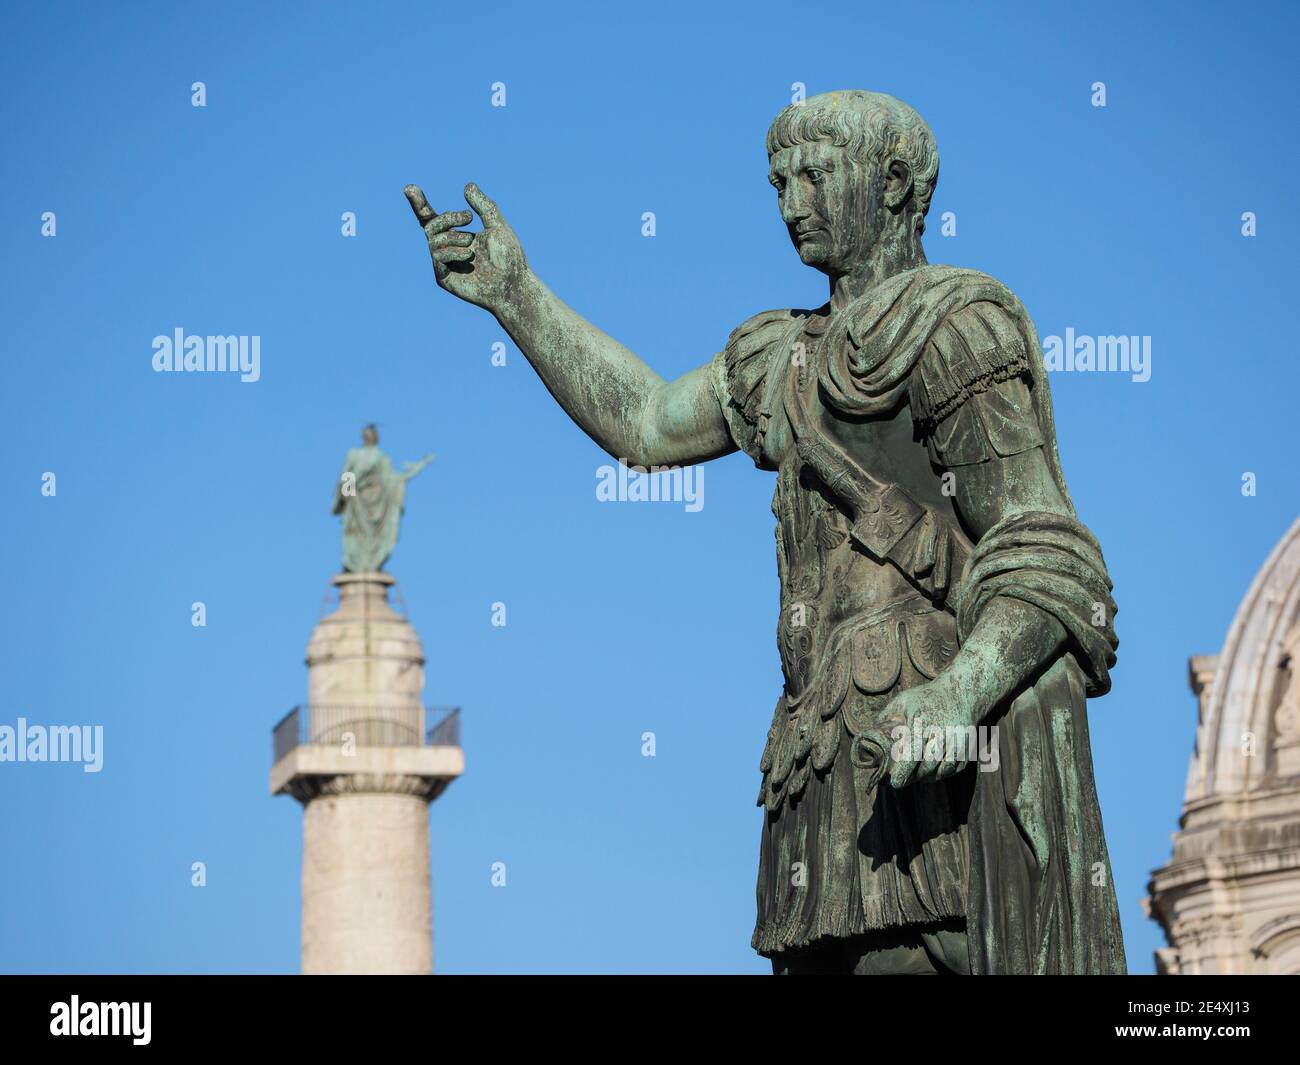 Roma. Italia. Estatua de bronce del emperador romano Trajano en Via dei Fori Imperiali, la columna de Trajano está en el fondo. 13 Emperador del Imperio Romano Foto de stock